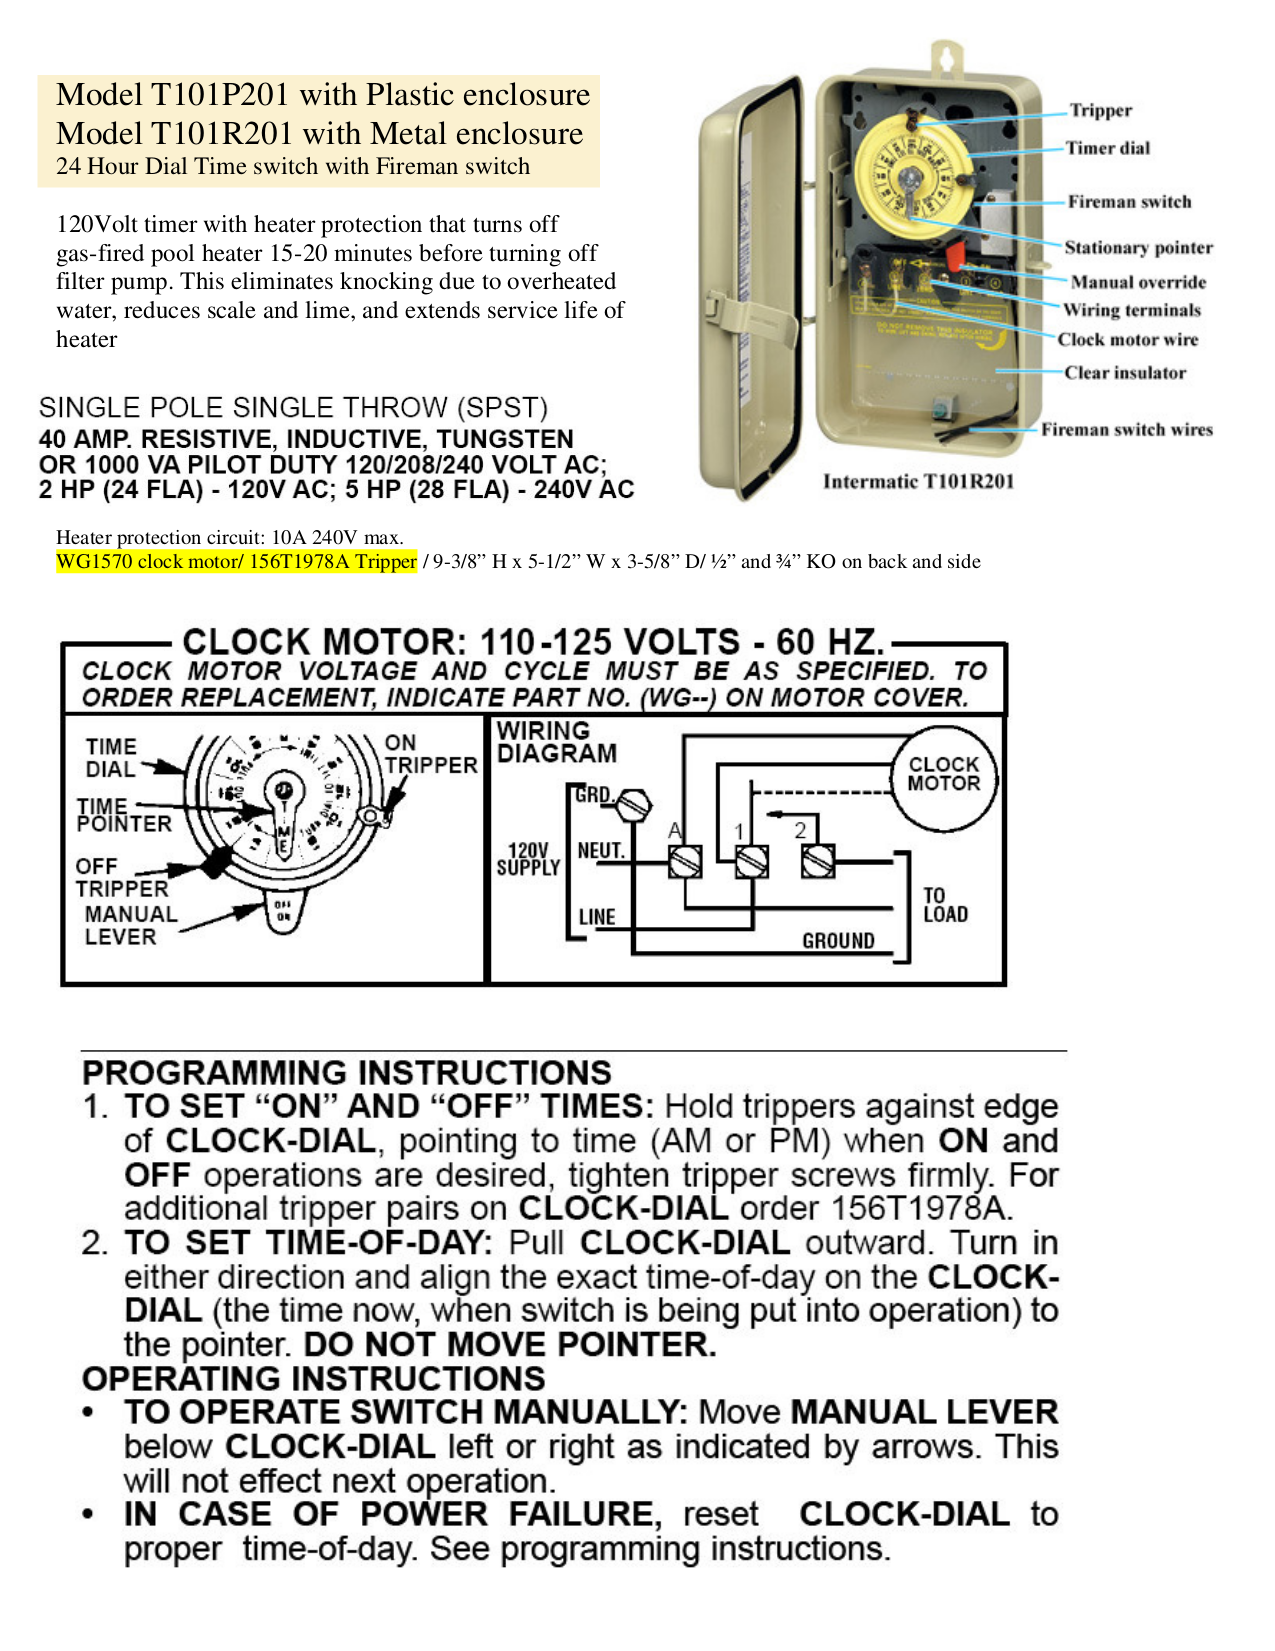 intermatic t 104 wiring diagram